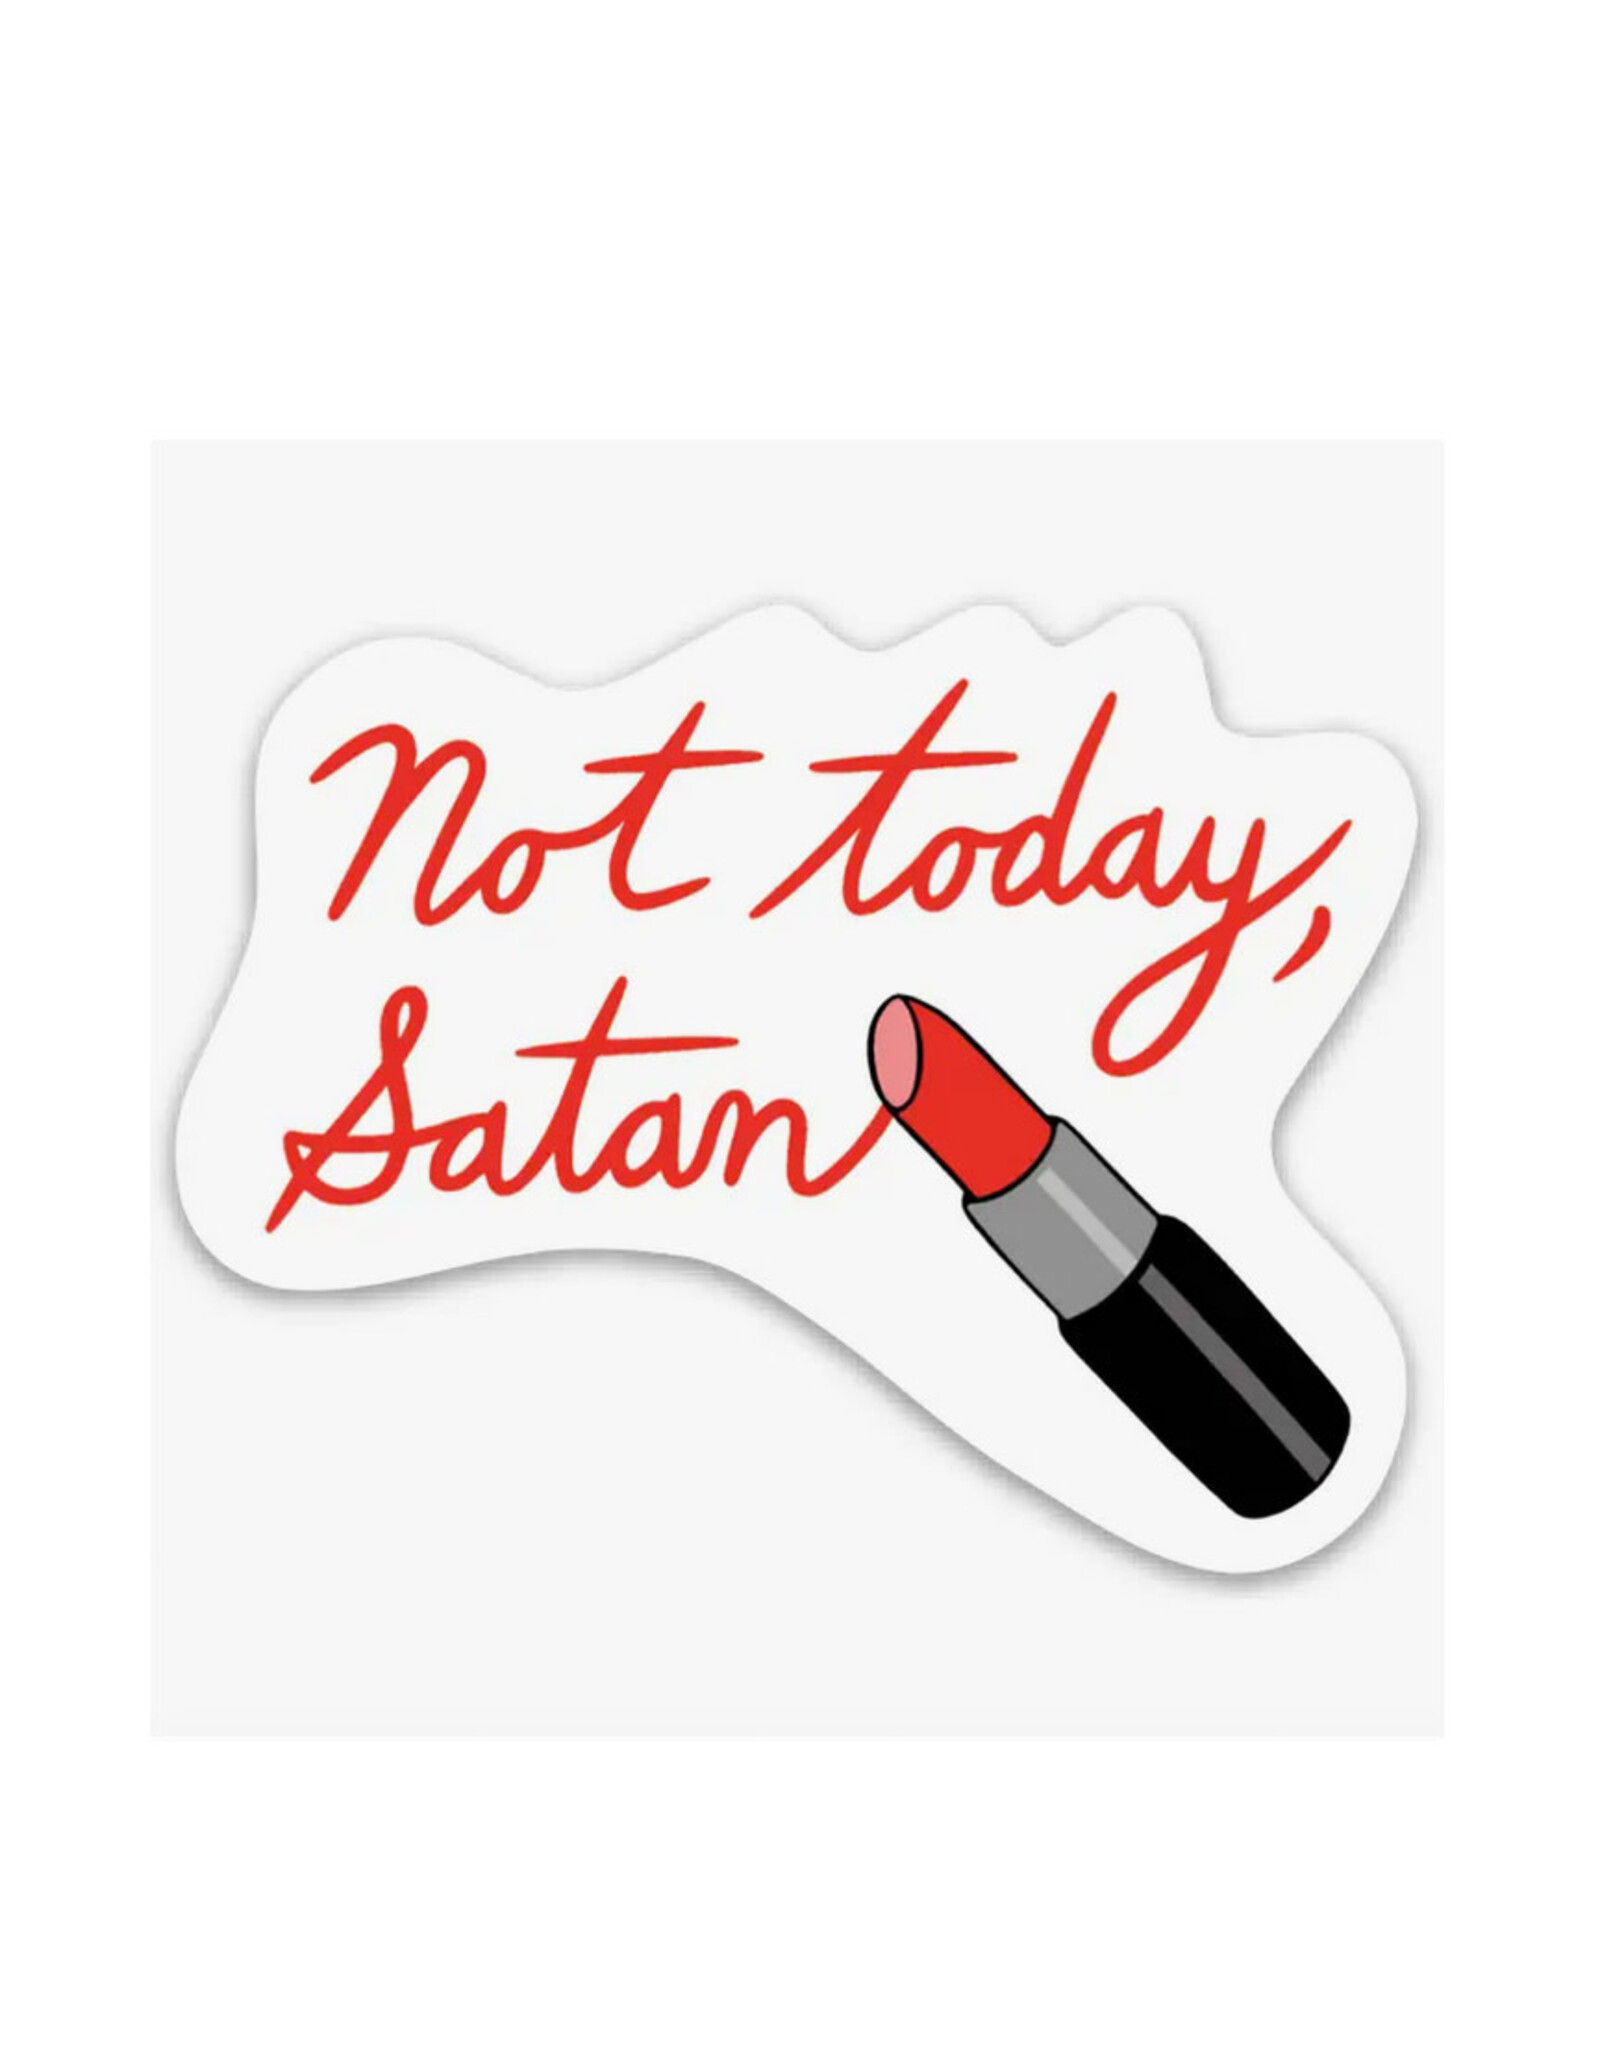 Not Today Satan Lipstick Sticker